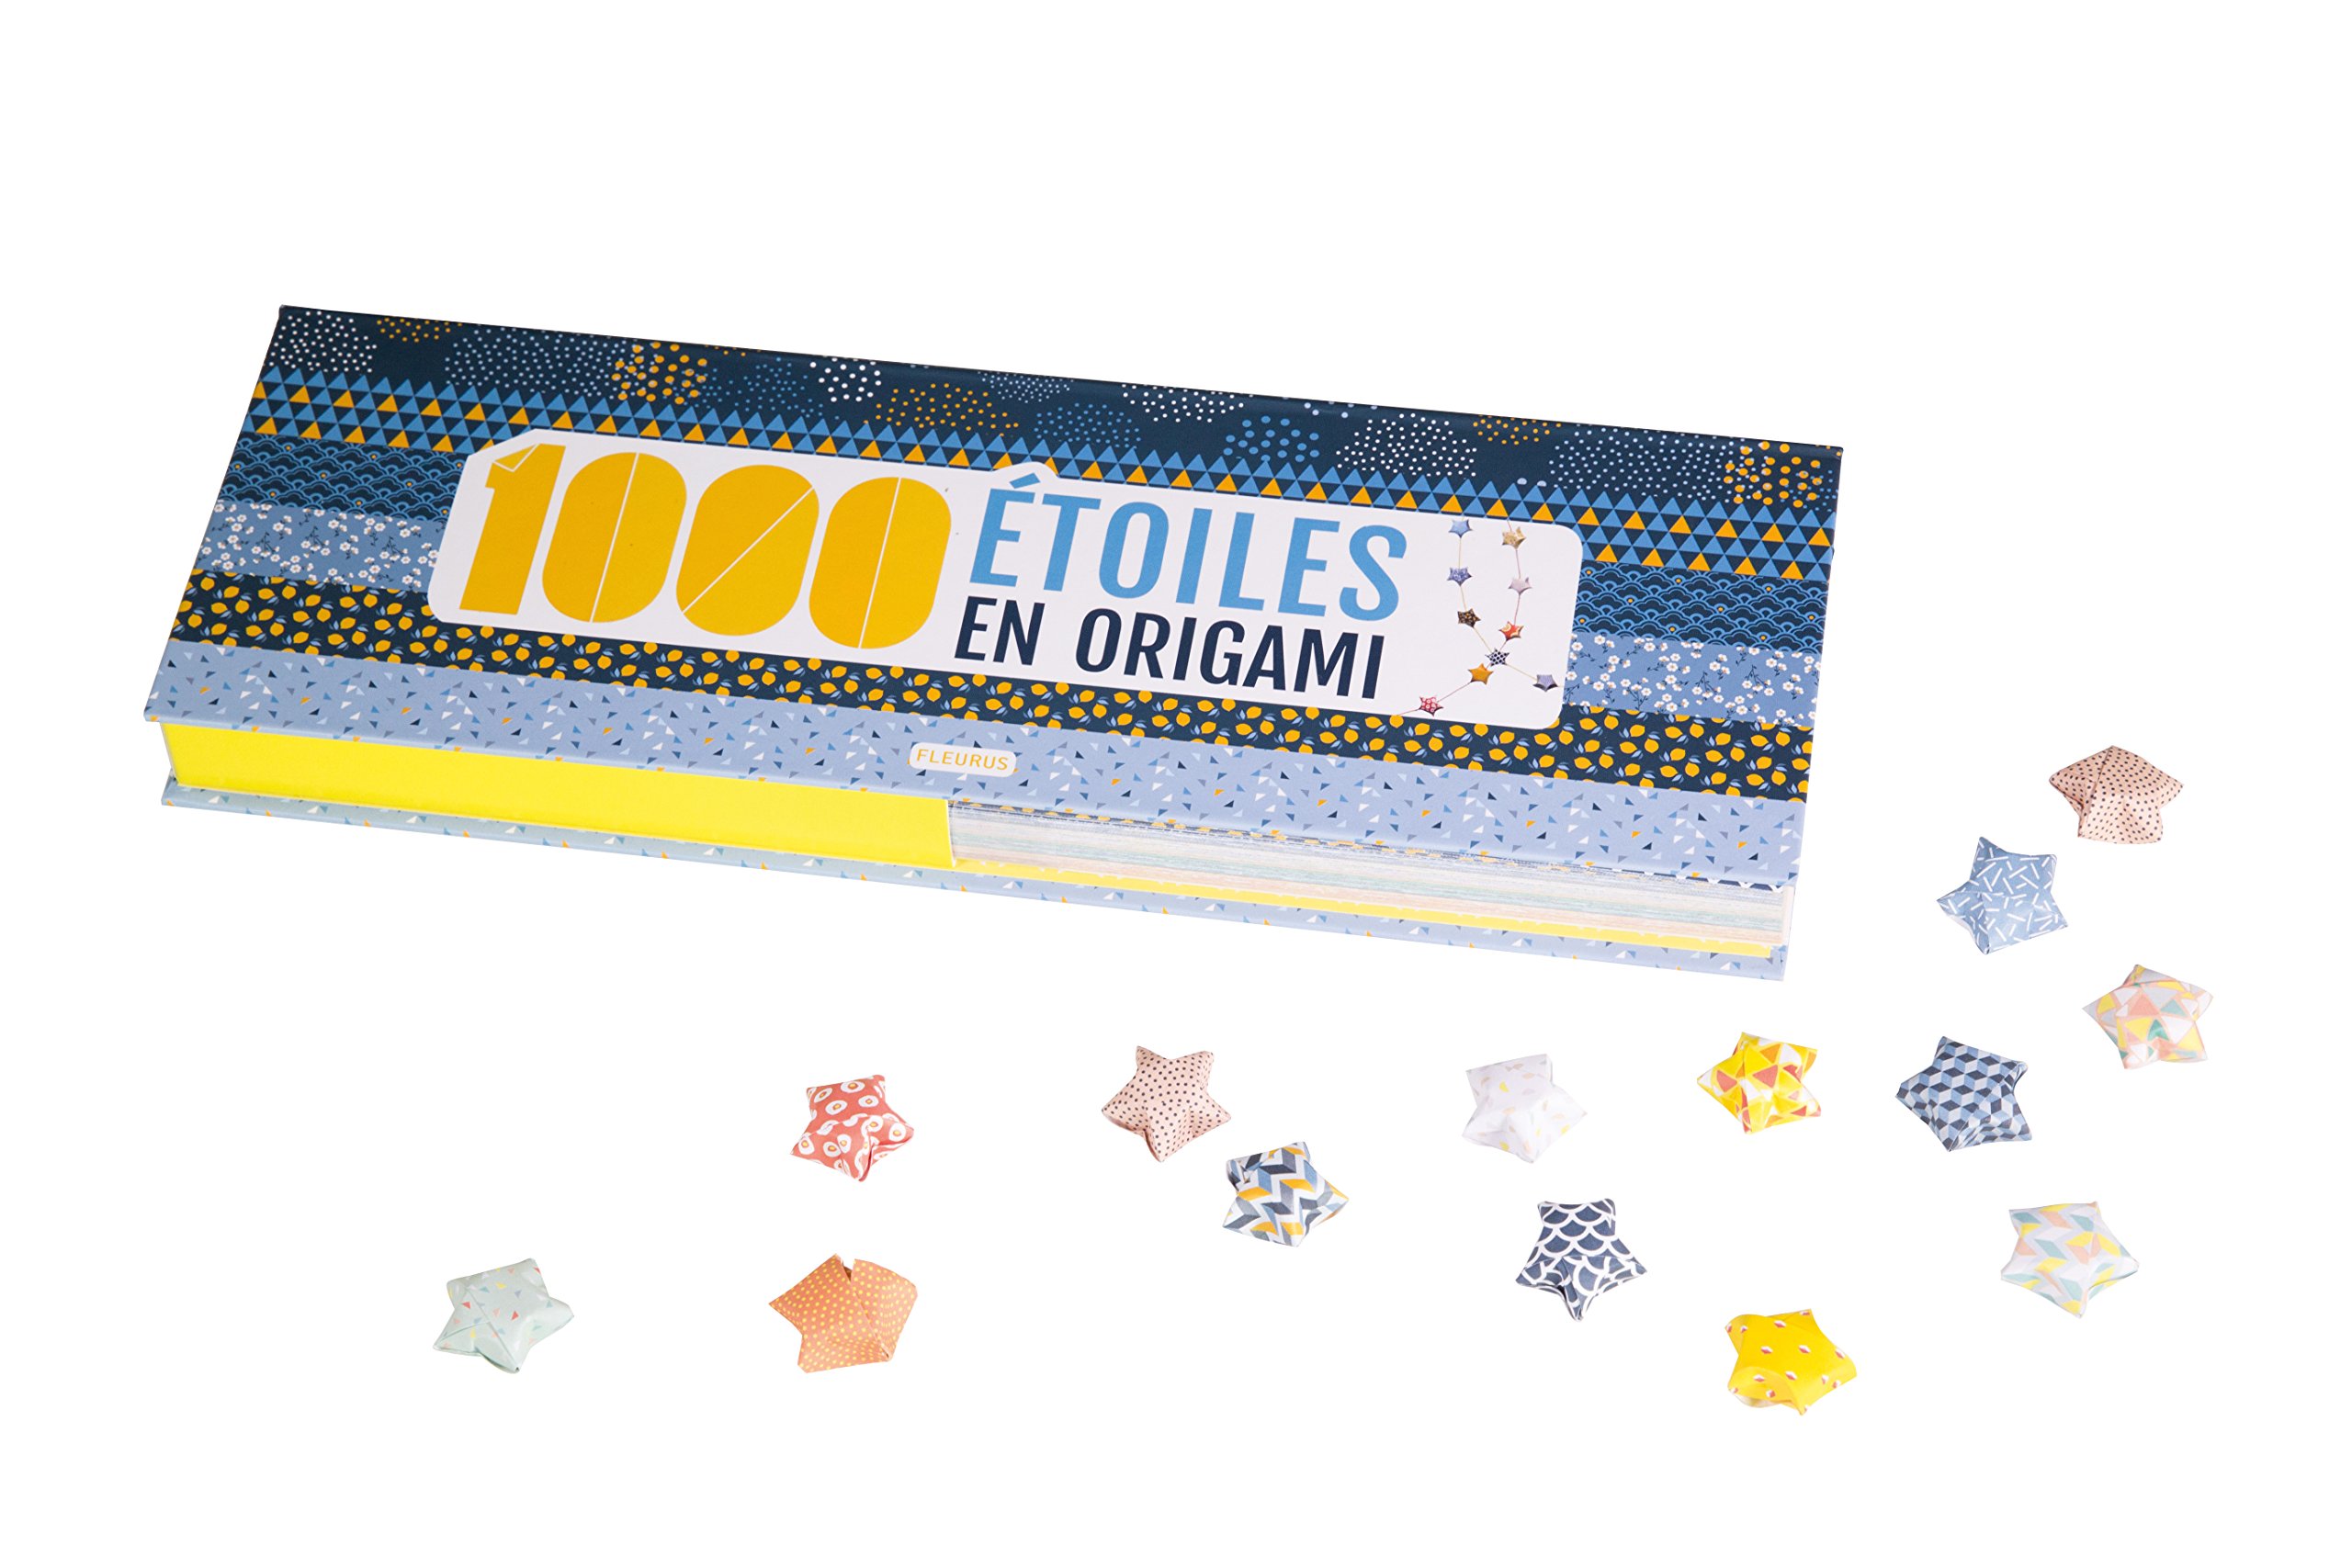 1000 étoiles en origami